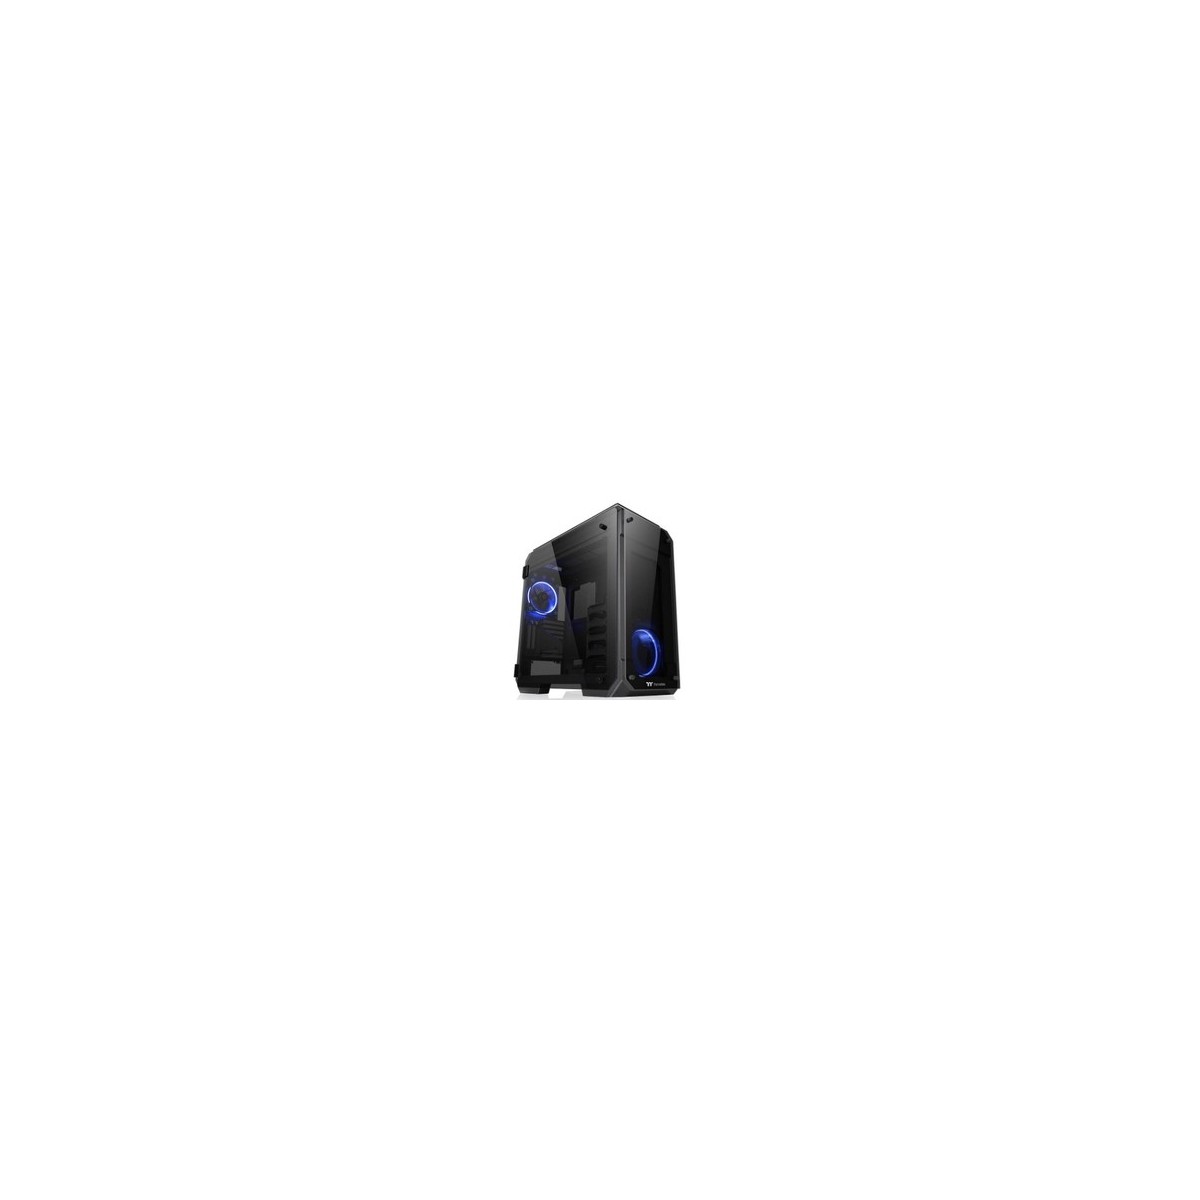 Thermaltake View 71 Tempered Glass Edition - Full Tower - PC - Black - ATX - EATX - micro ATX - Mini-ATX - SPCC - Gaming